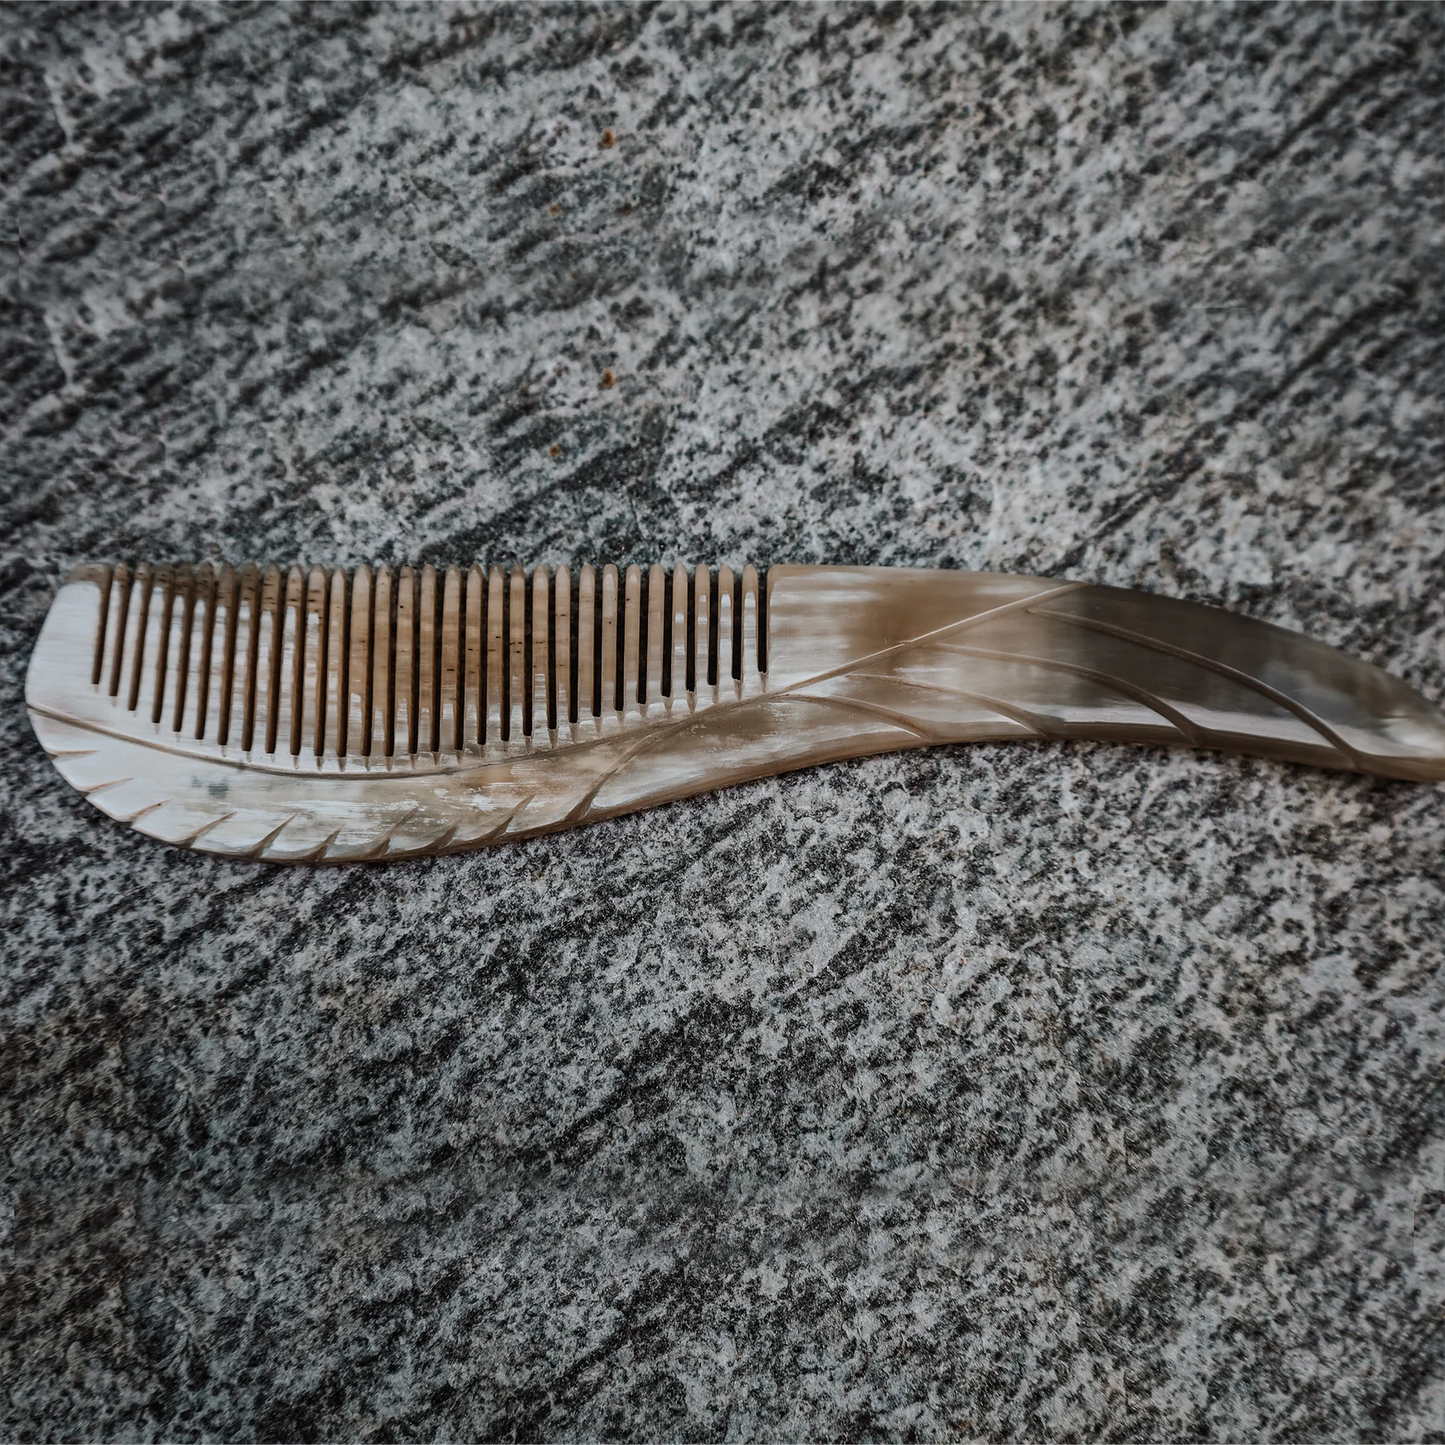 Odin's Beard Comb